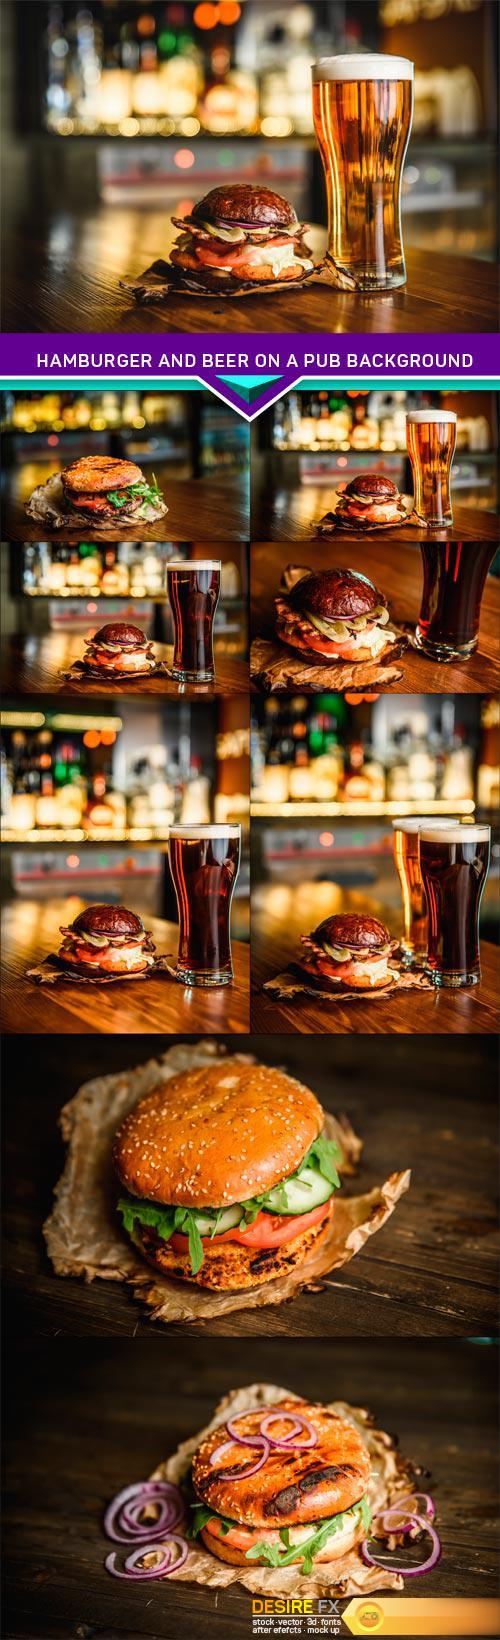 Hamburger and beer on a pub background 8X JPEG